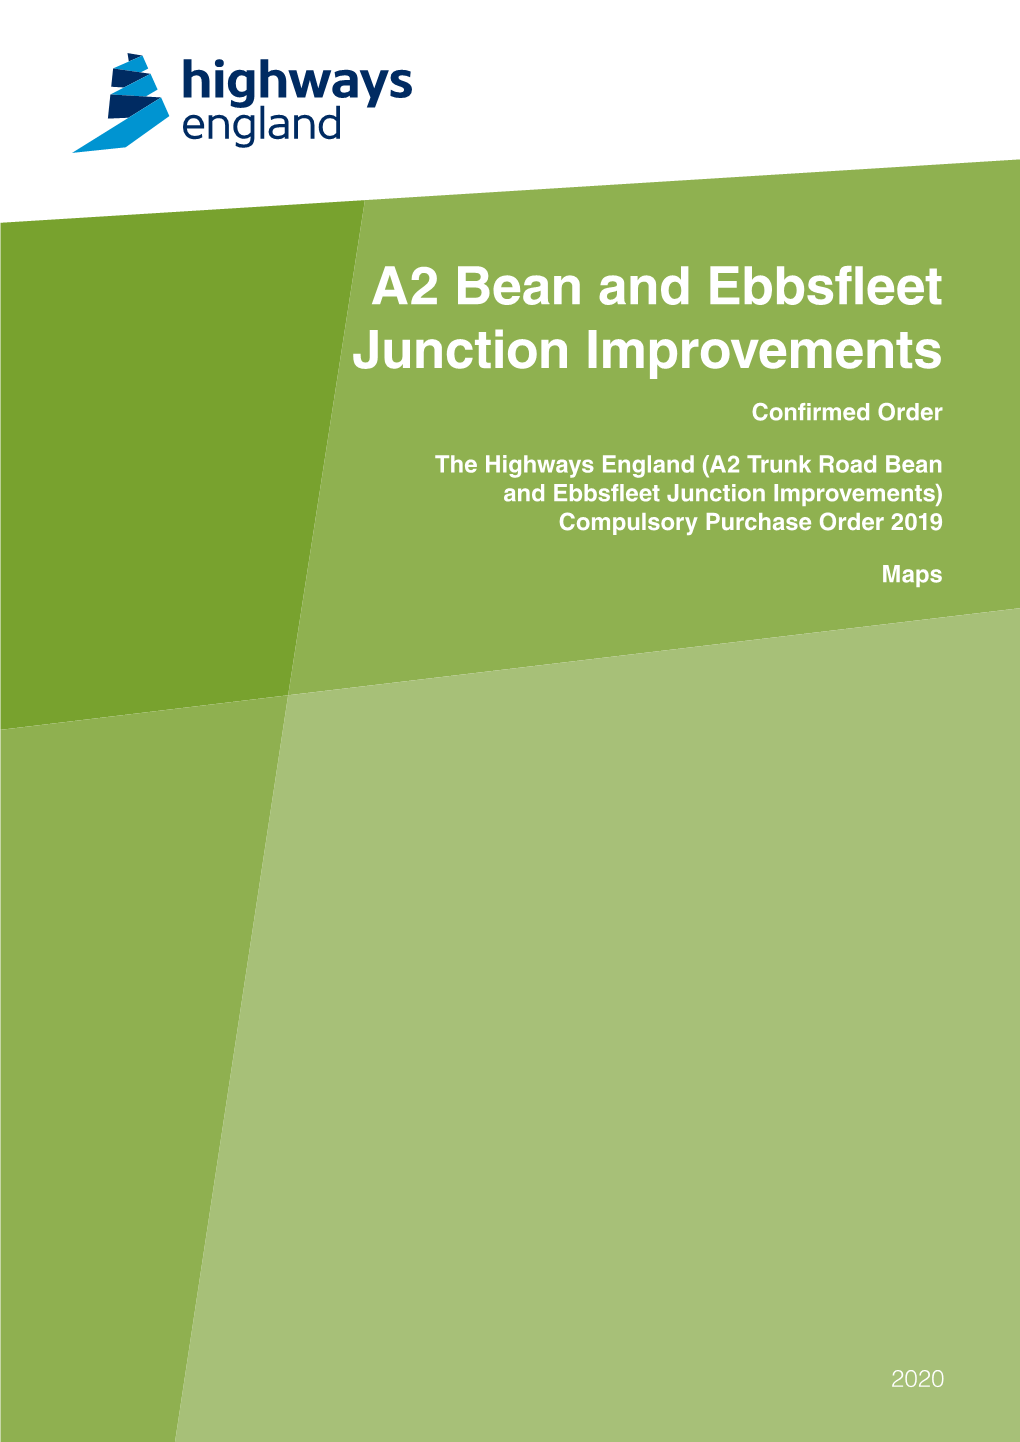 A2 Bean and Ebbsfleet Junction Improvements Confirmed Order